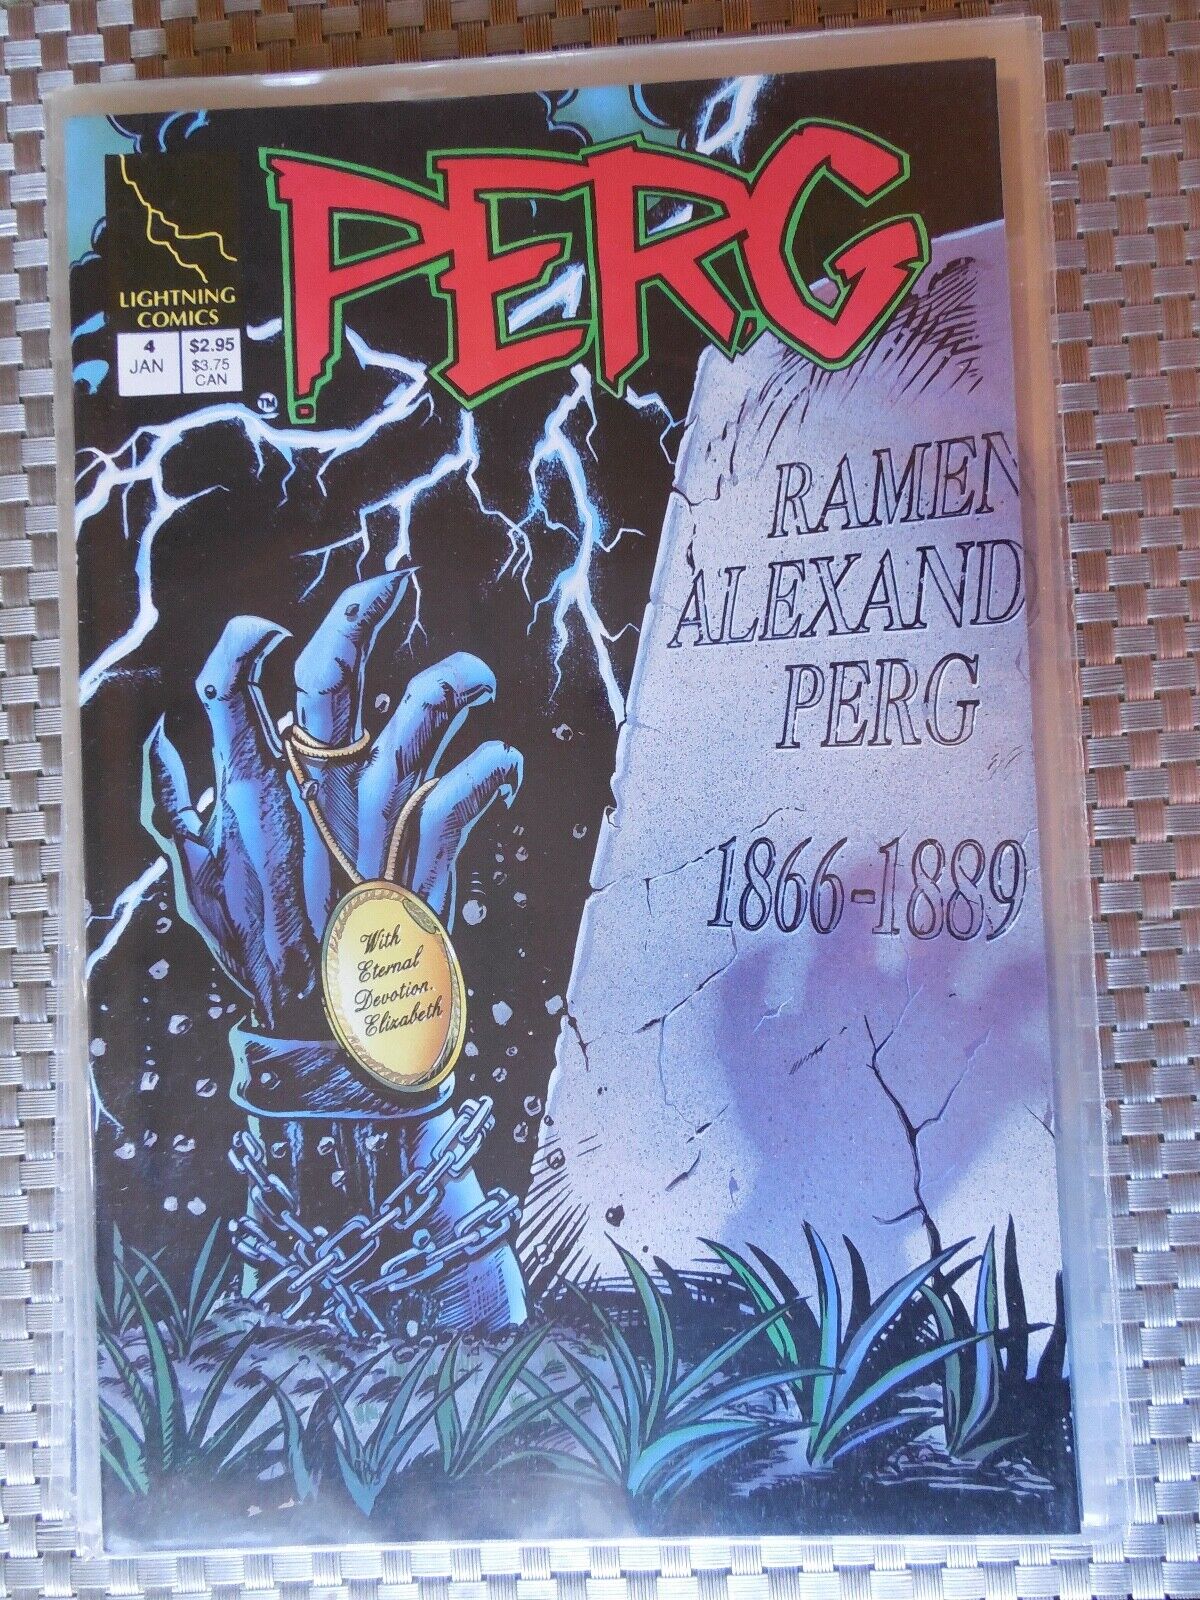 PERG #4 Lightning Comics| I combine shipping